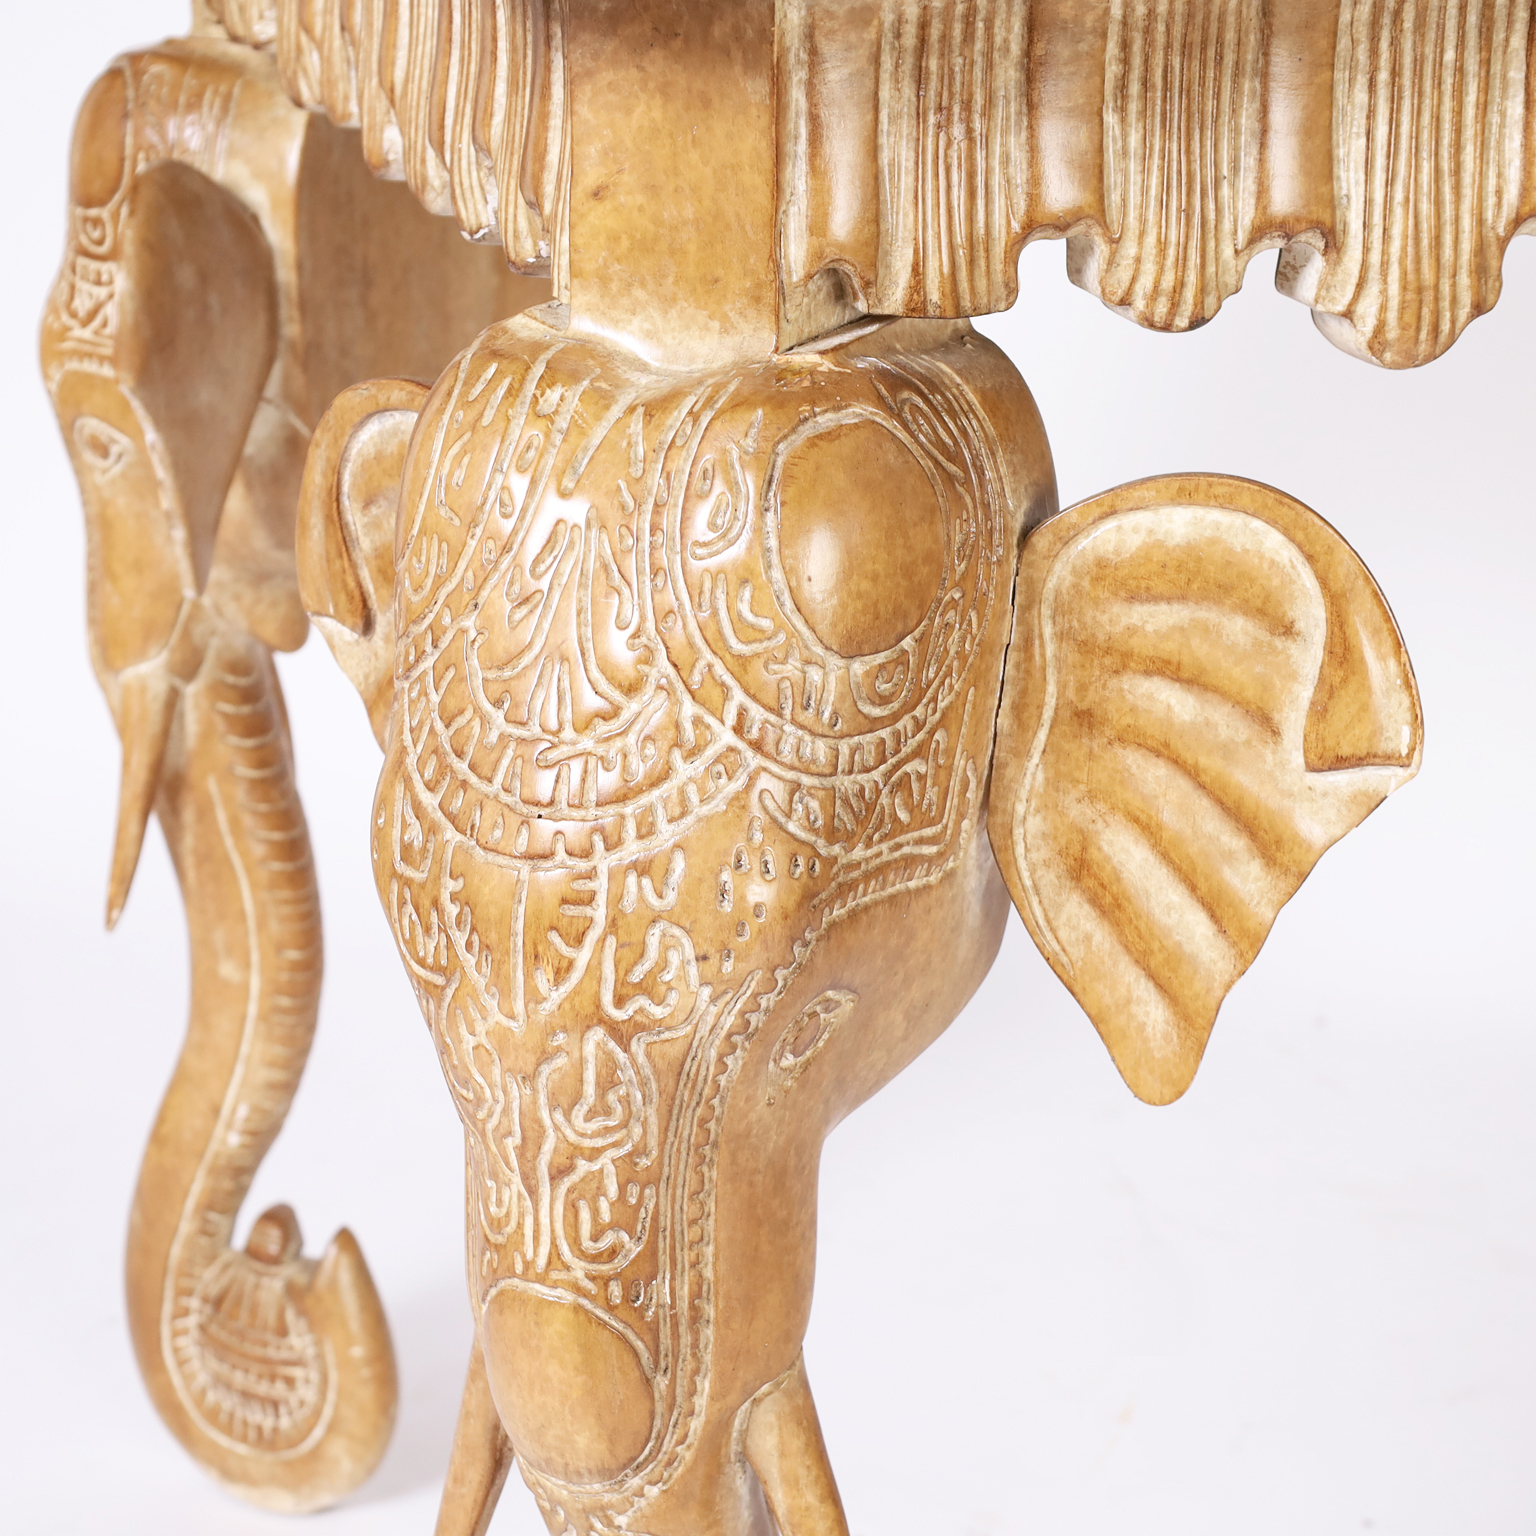 Mid Century Writing Table with Elephant Head legs